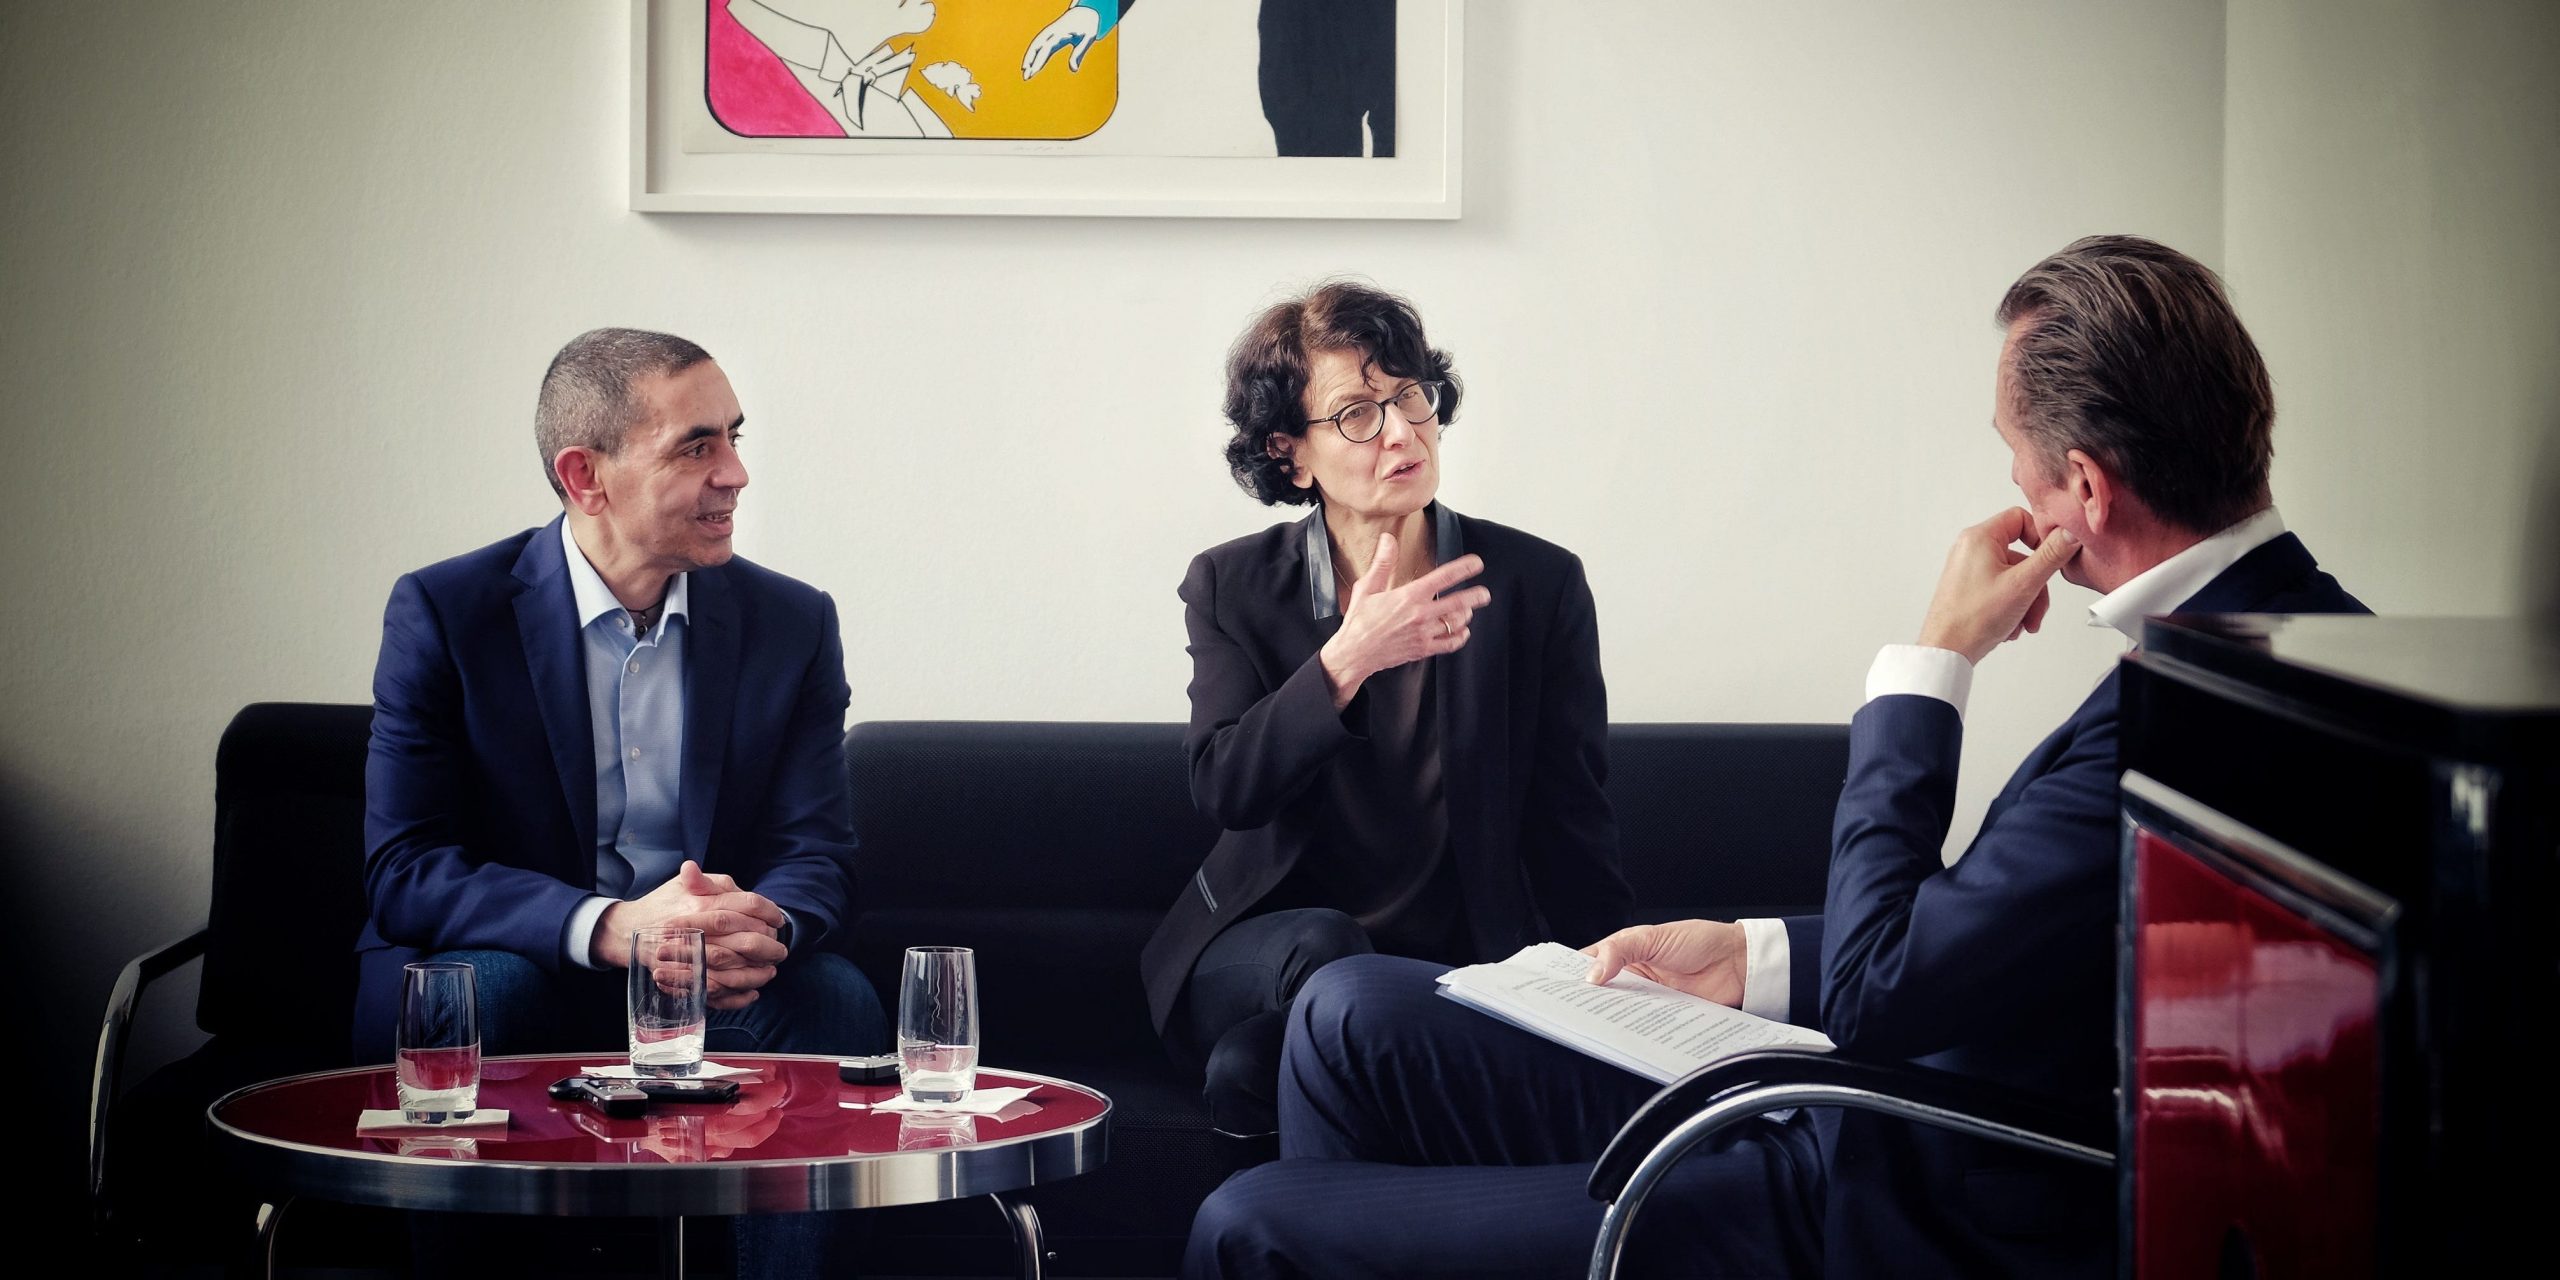 Oprichters Özlem Türeci en Ugur Sahin spreken met CEO Matthias Döpfner van mediabedrijf Axel Springer.